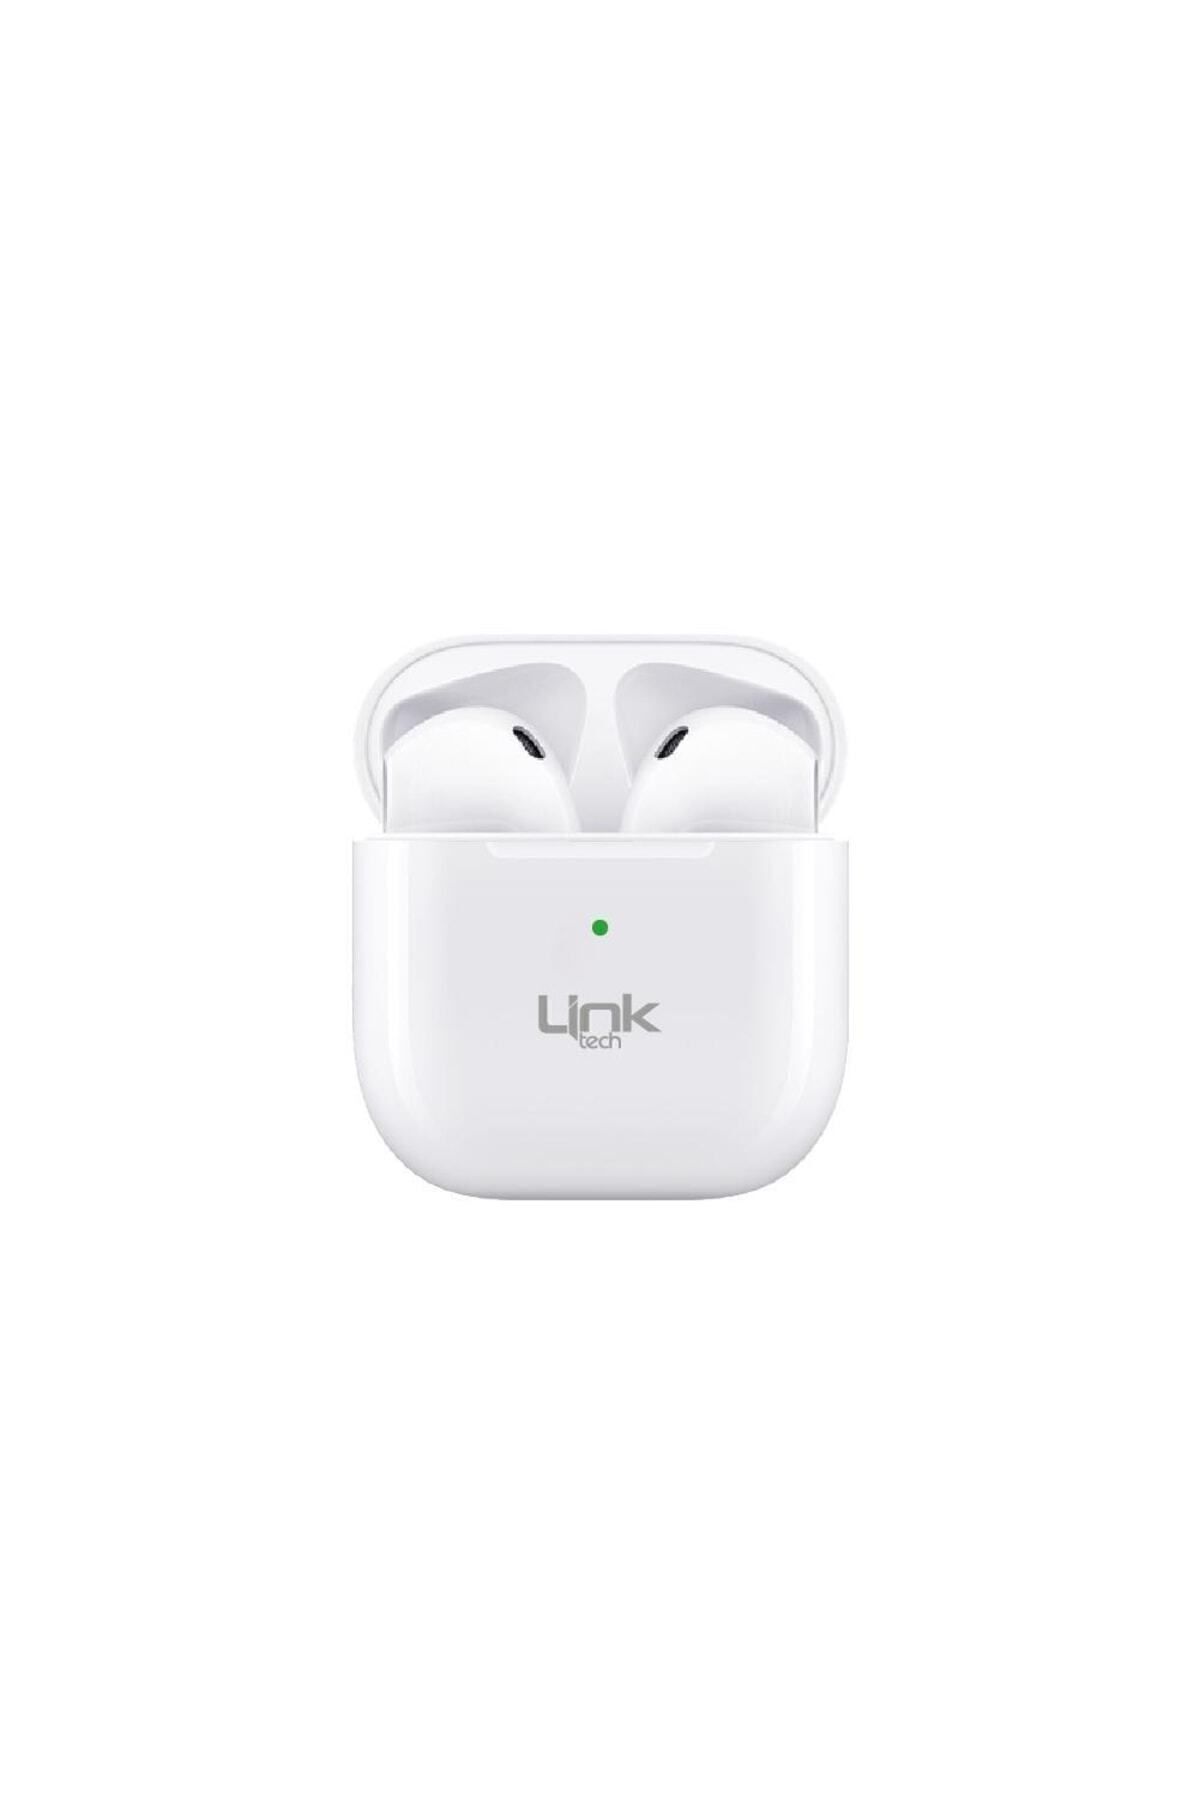 Link Ap01 Eco Friendly Akıllı Pods Bluetooth Kulaklık Gri Kılıf Hediyeli